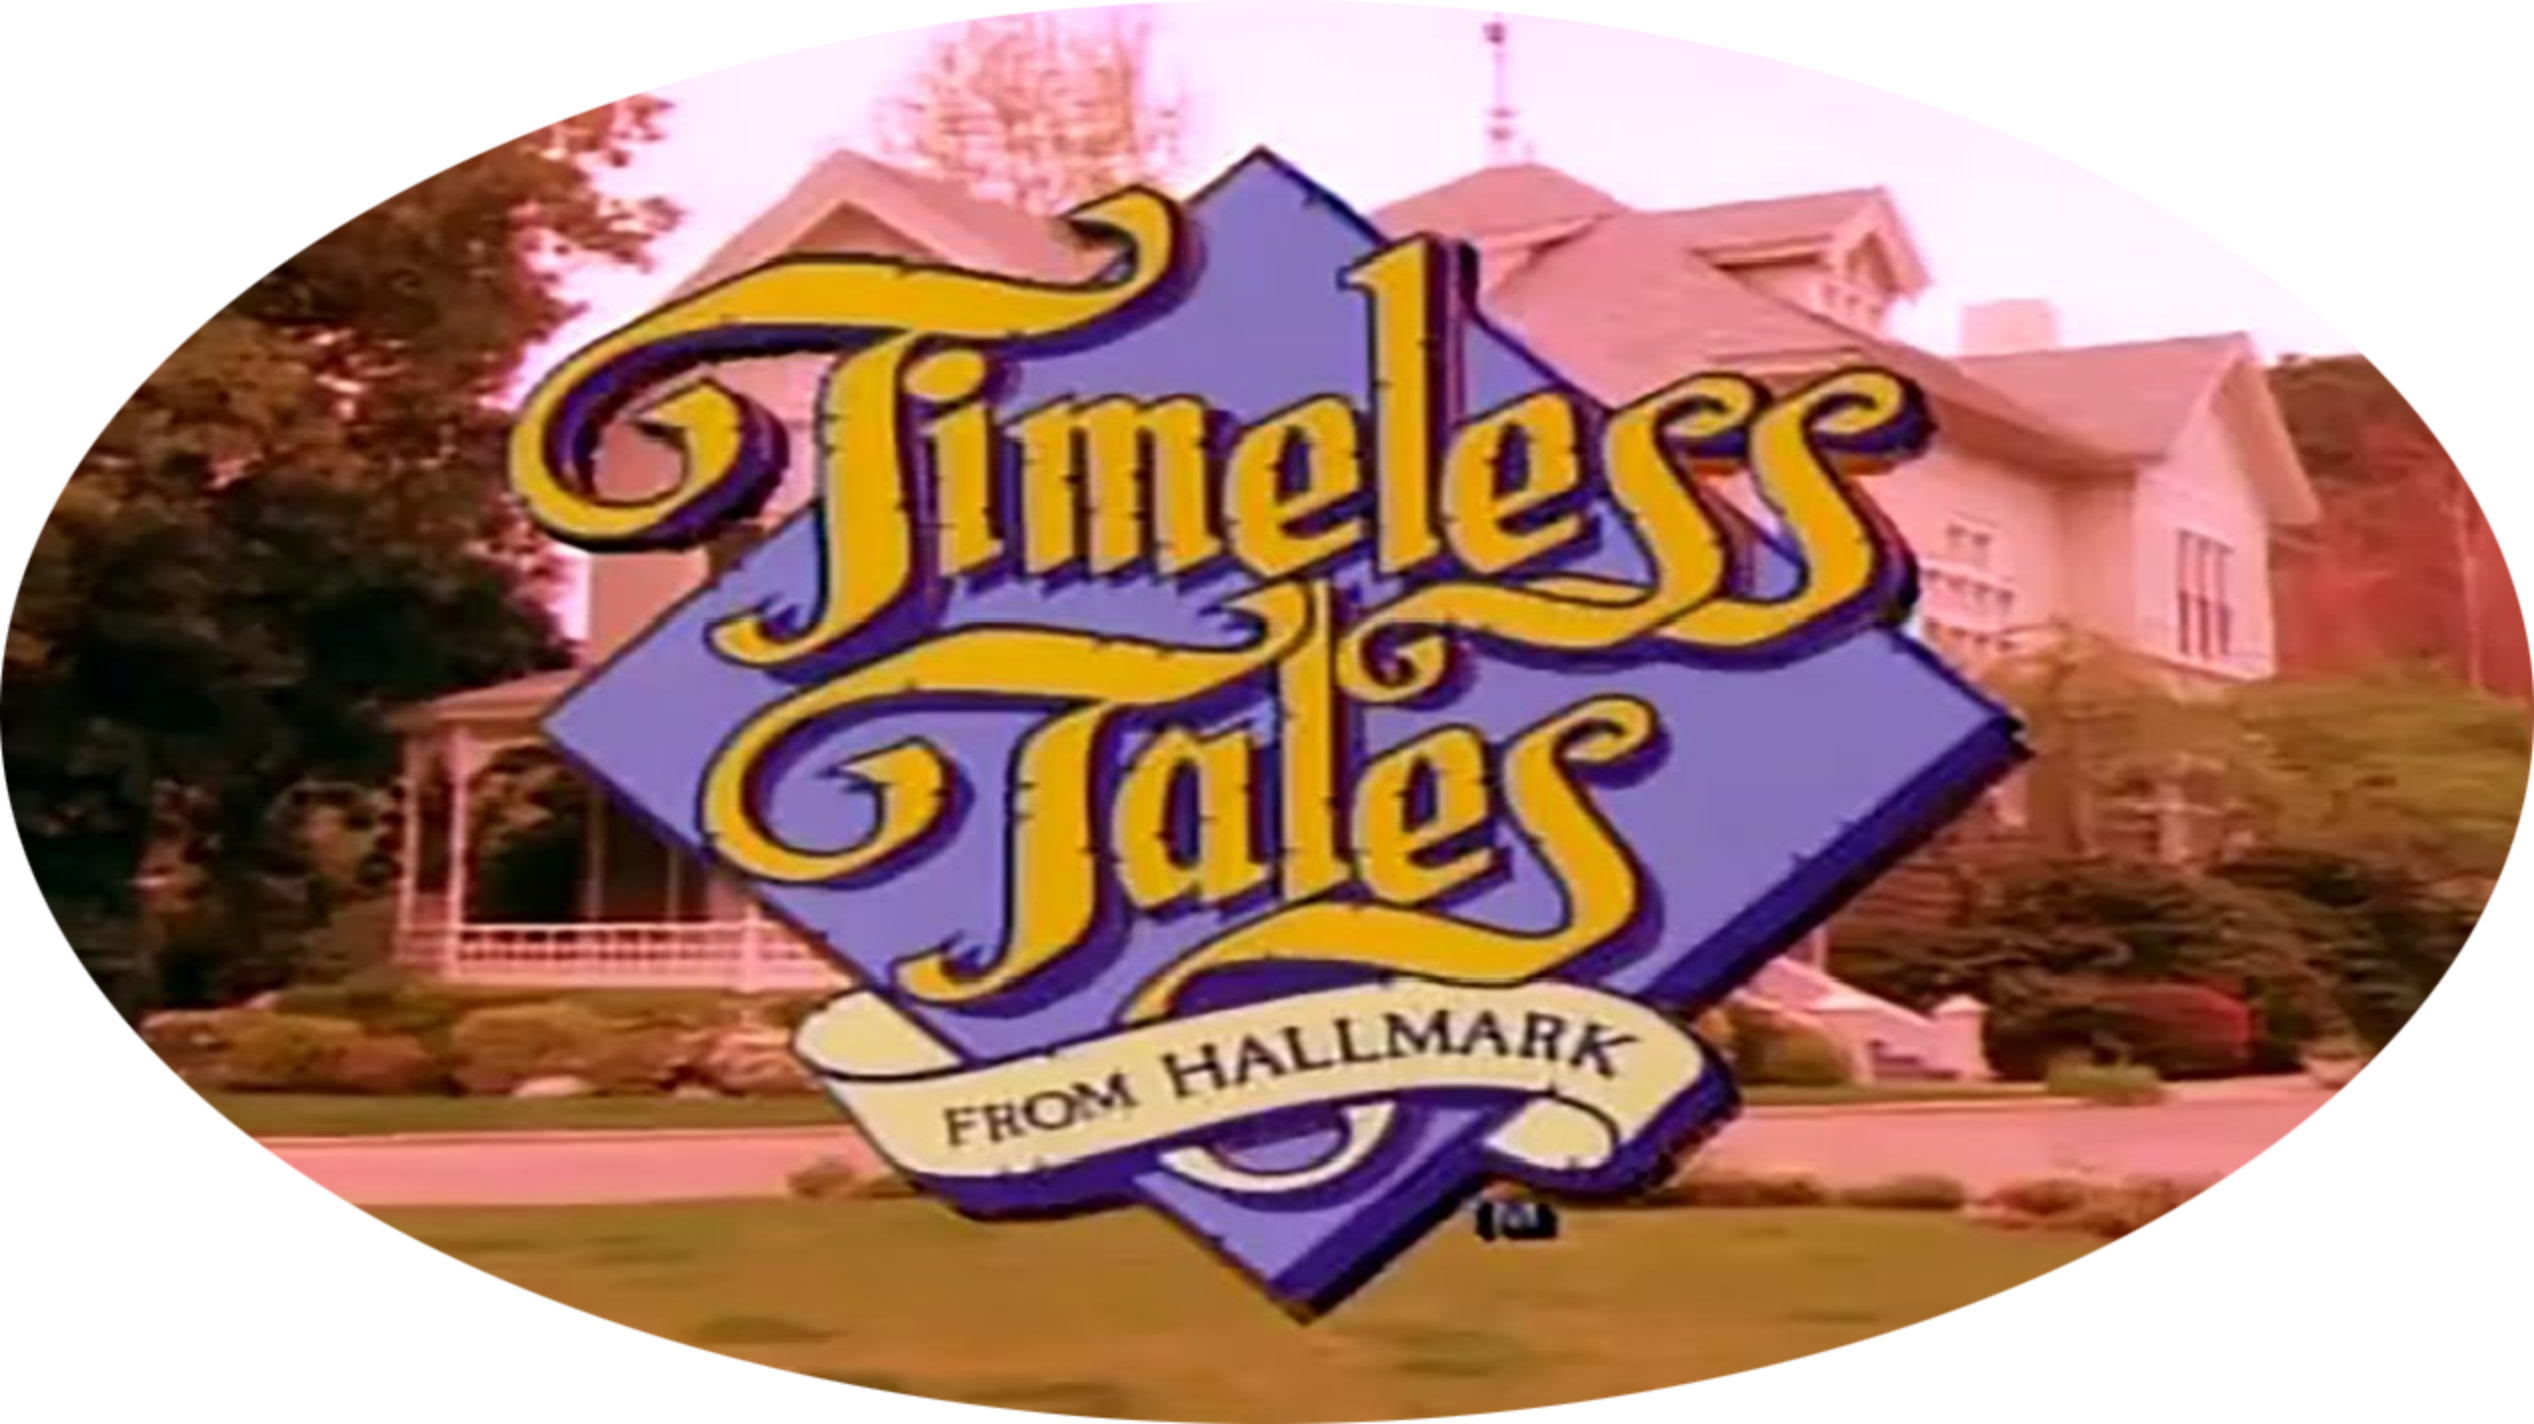 Timeless Tales from Hallmark (1 DVD Box Set)